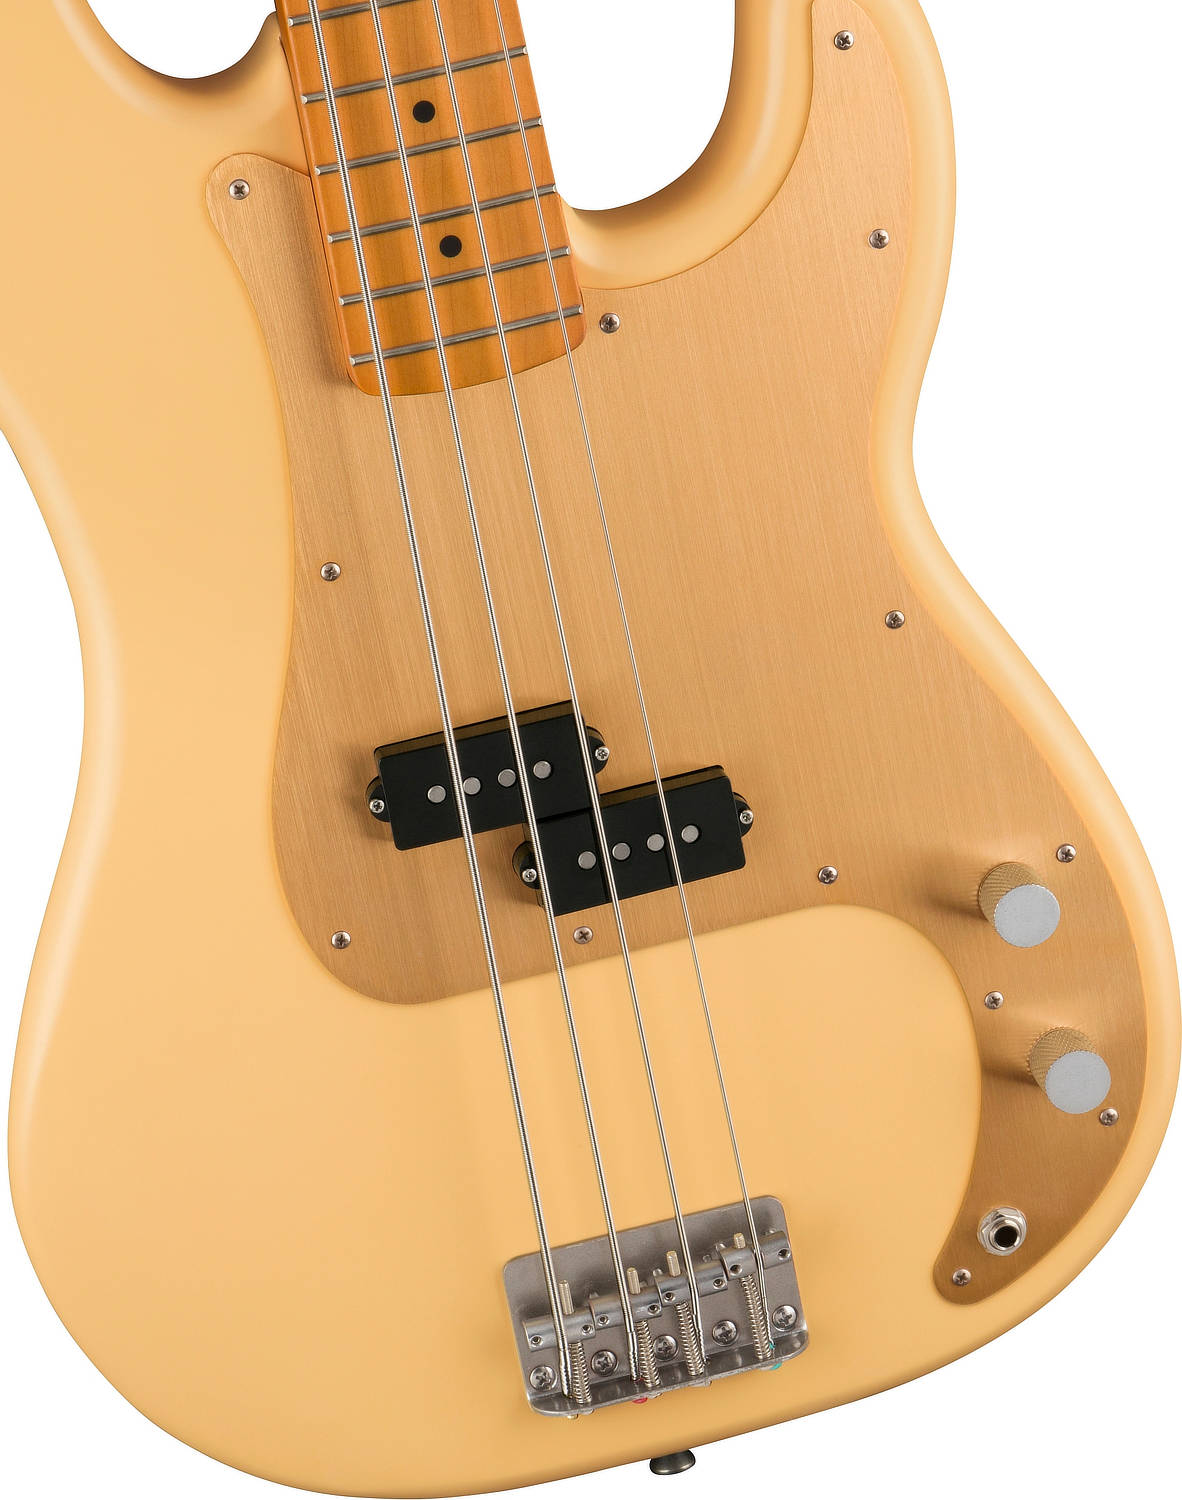 Squier 40th Anniversary Precision Bass Vintage Edition Bass Guitar